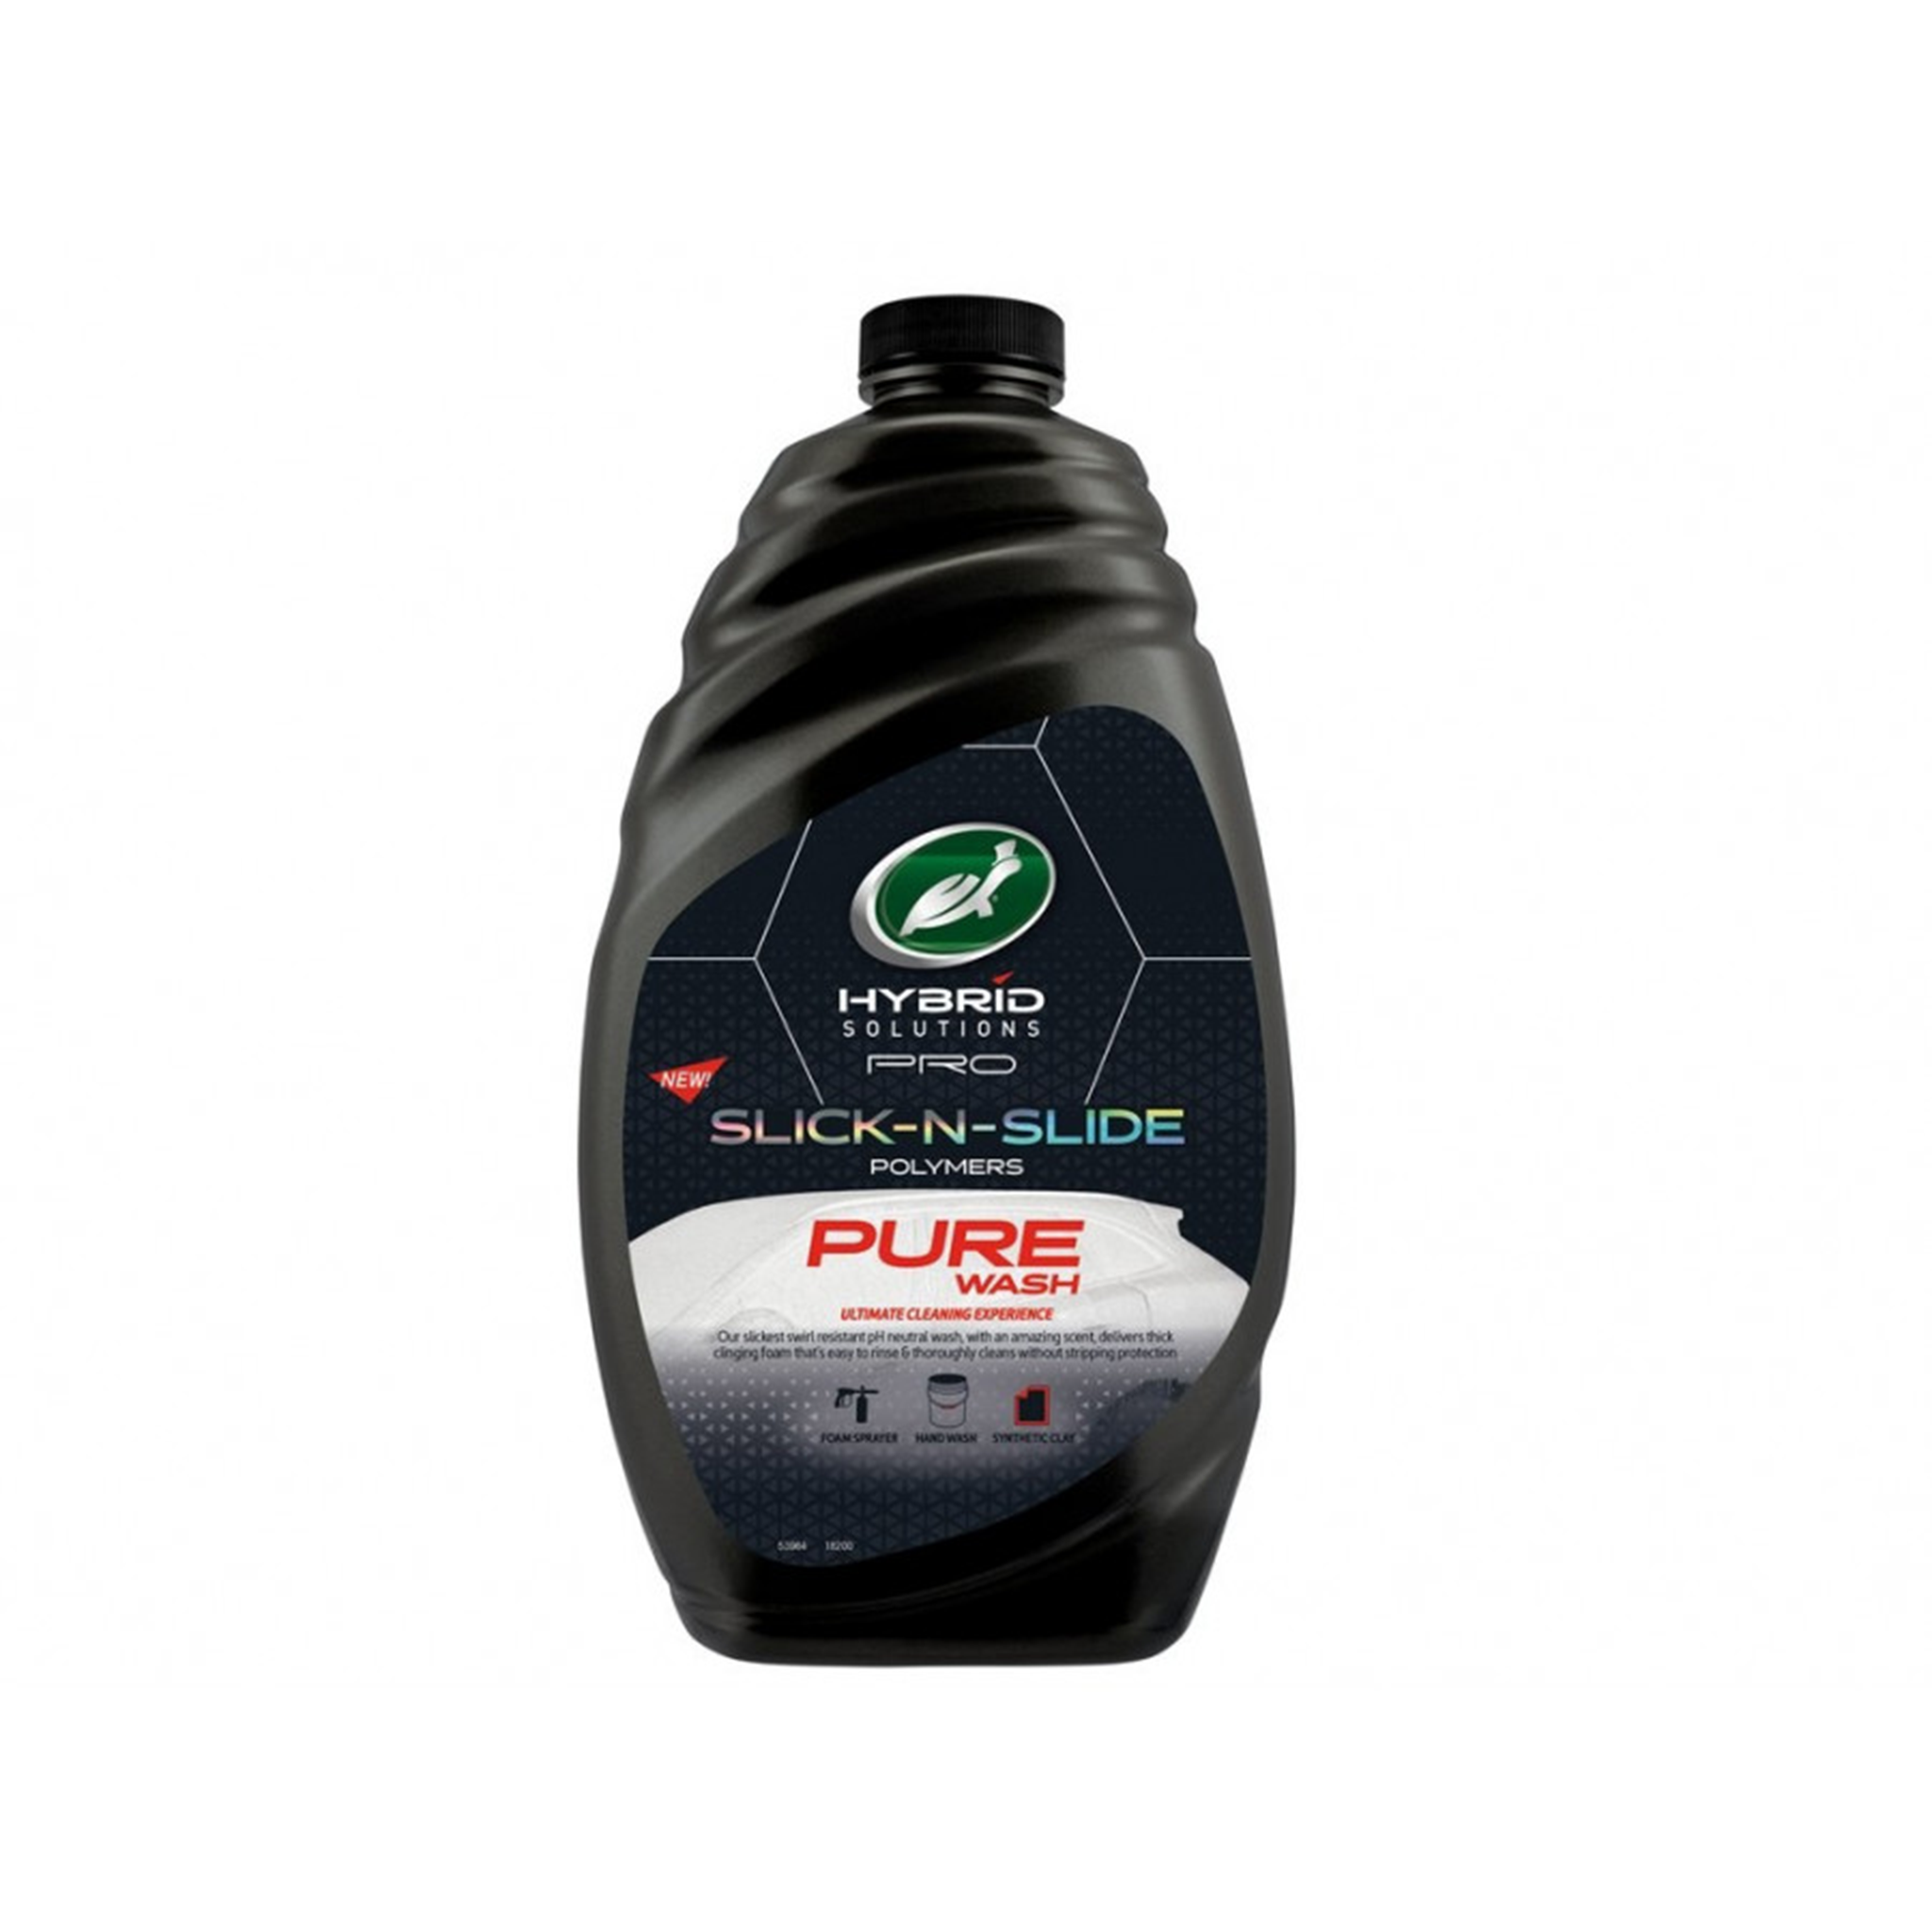 Bilschampo Turtle Wax Hybrid Solutions Pro Pure Wash, 1420 ml